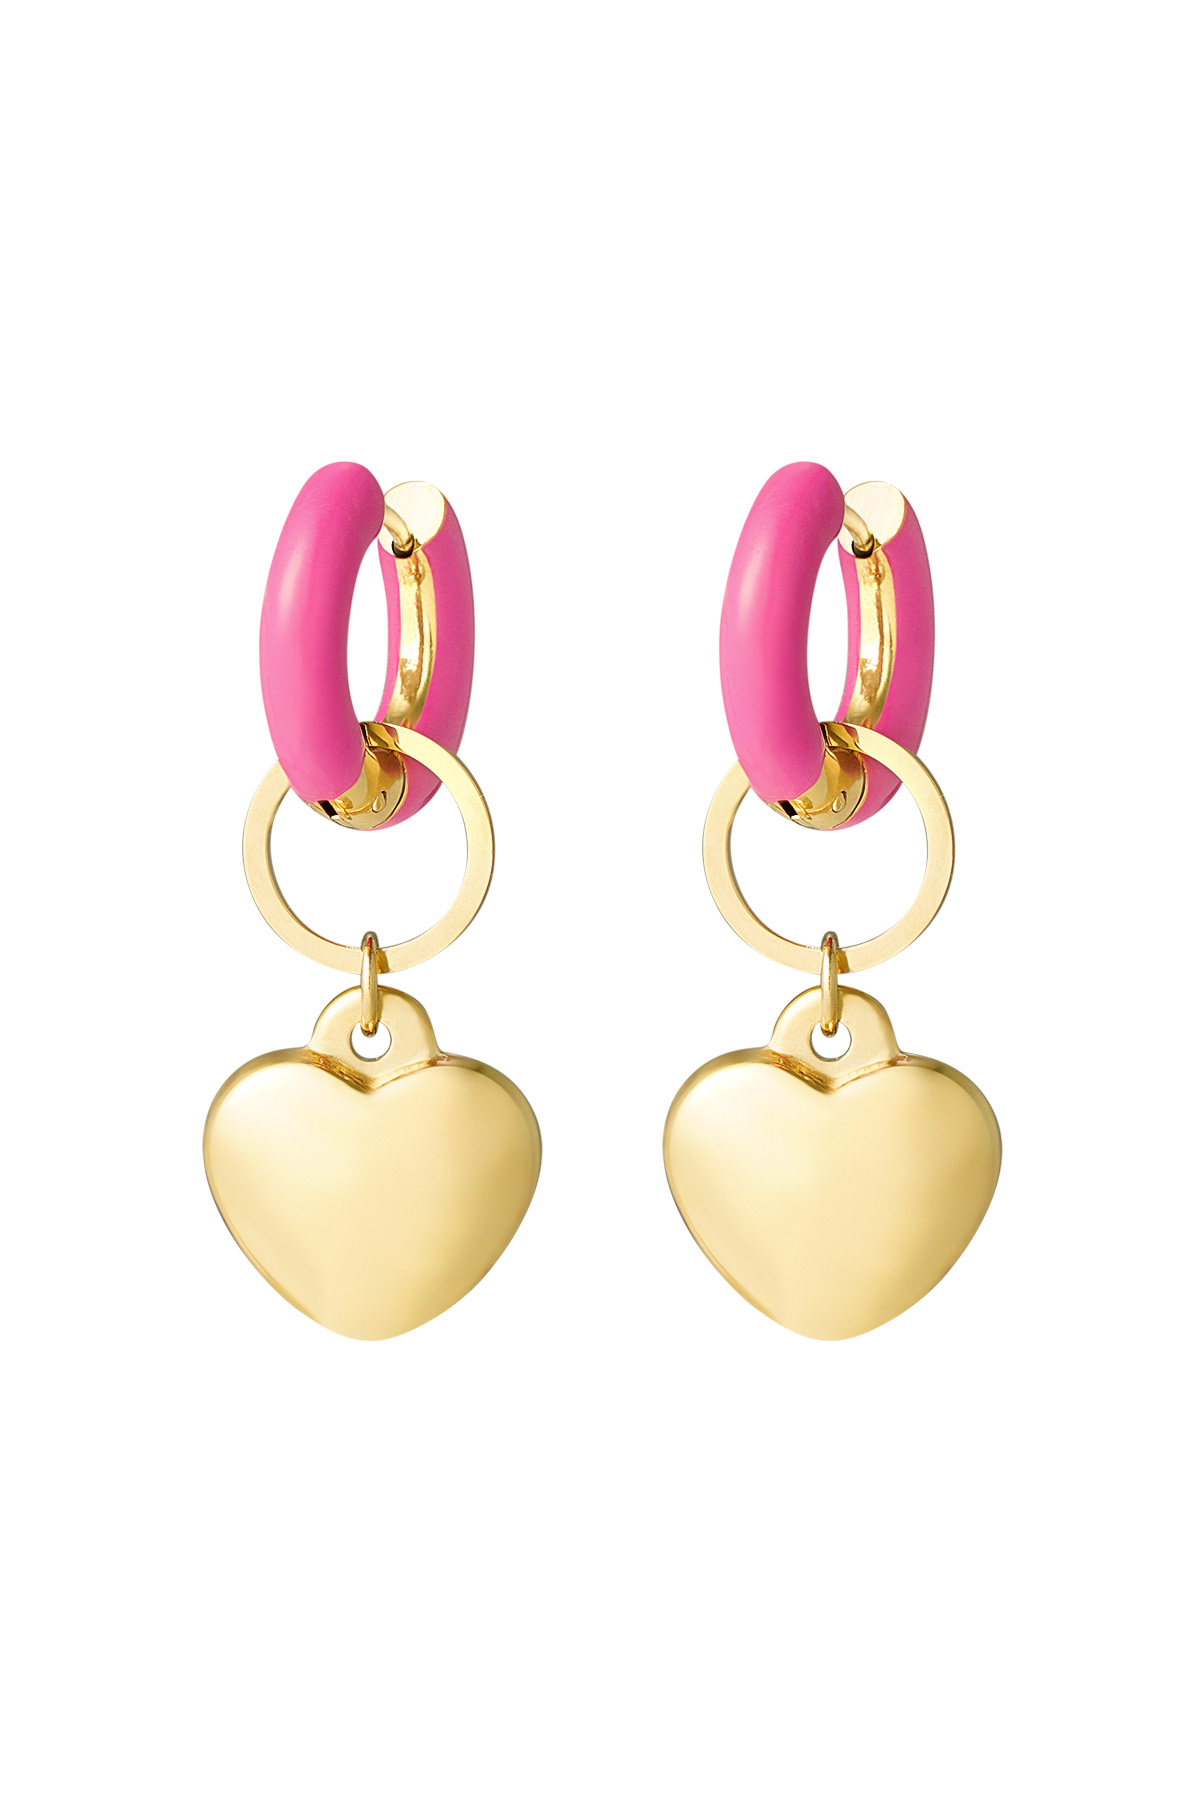 Ohrring farbiger Ring mit Herz rosa - gold